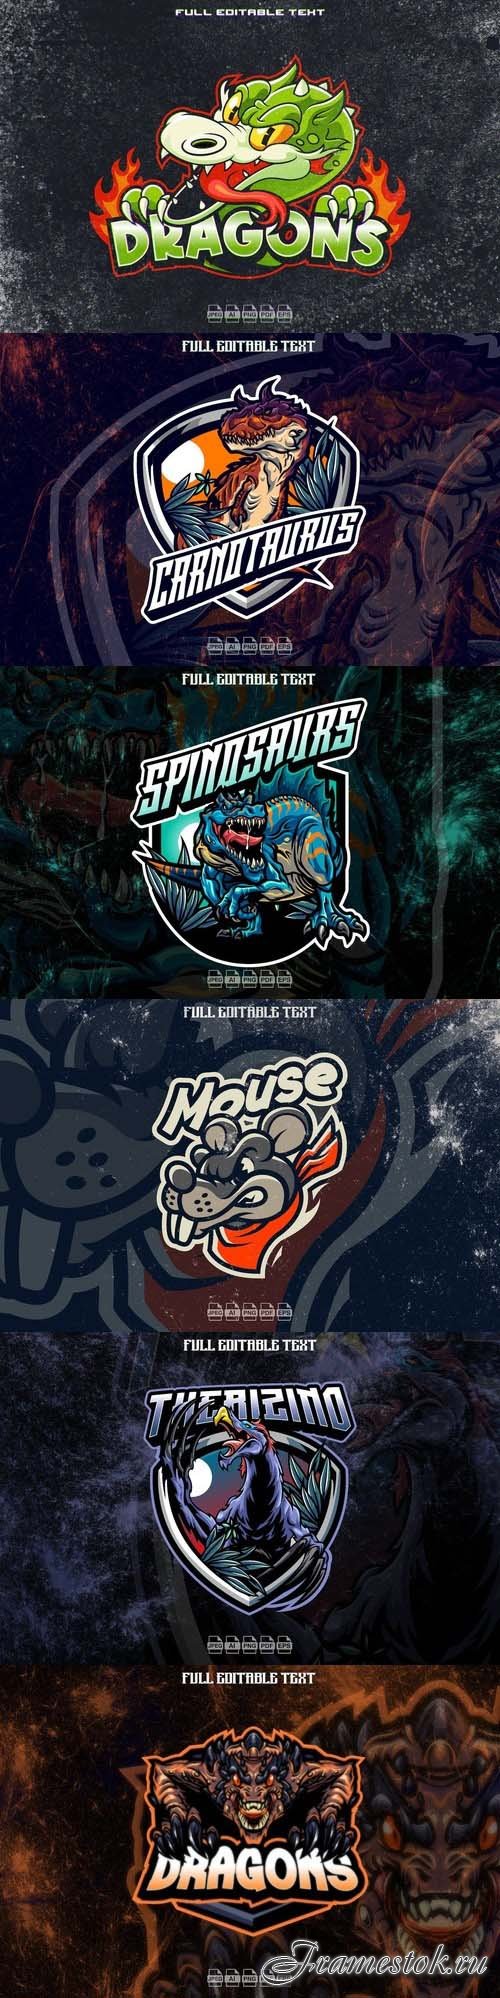 Mascot logo, cartoon character logo, retro logo vol 3